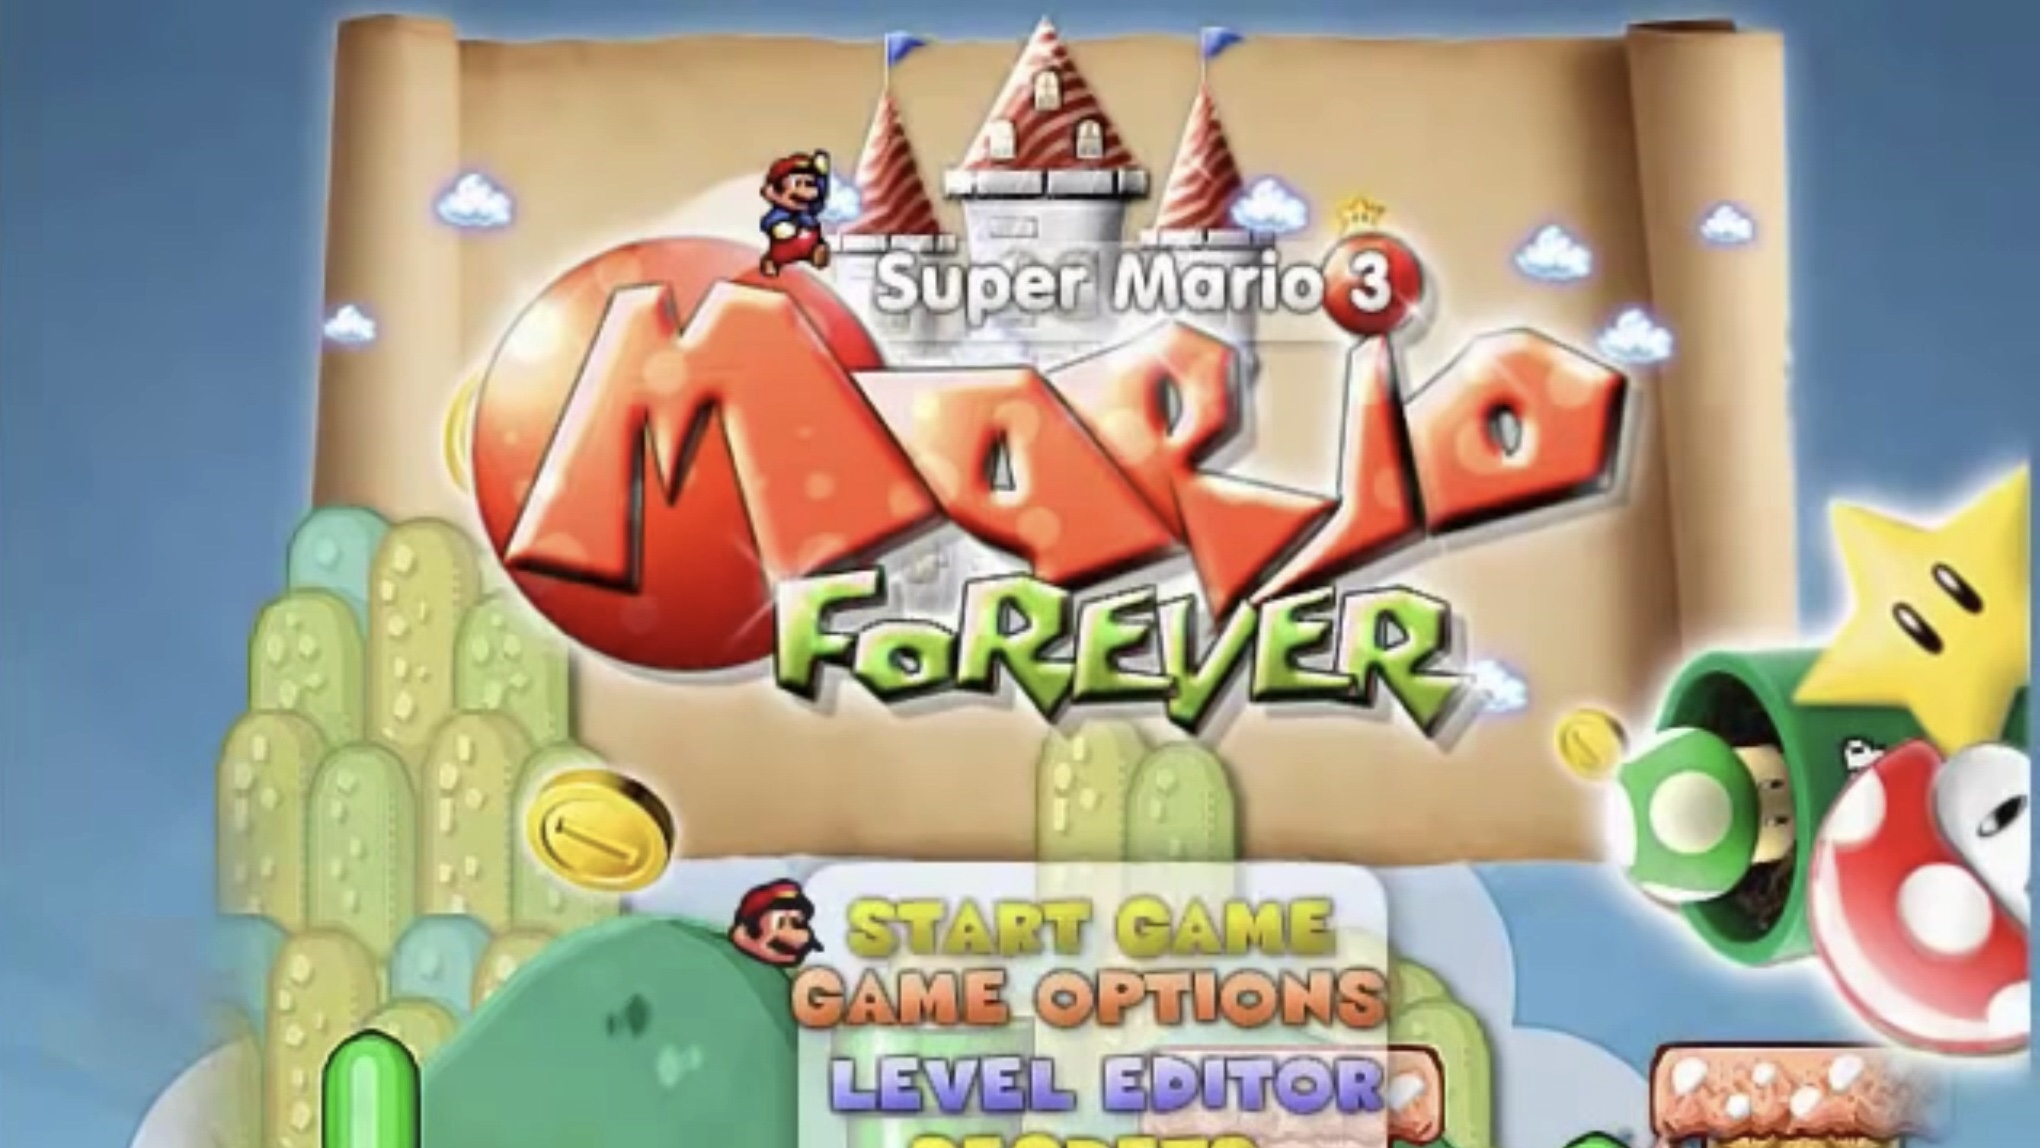 Category:Mario & Luigi: Bowser's Inside Story, VGMRevolution Wiki